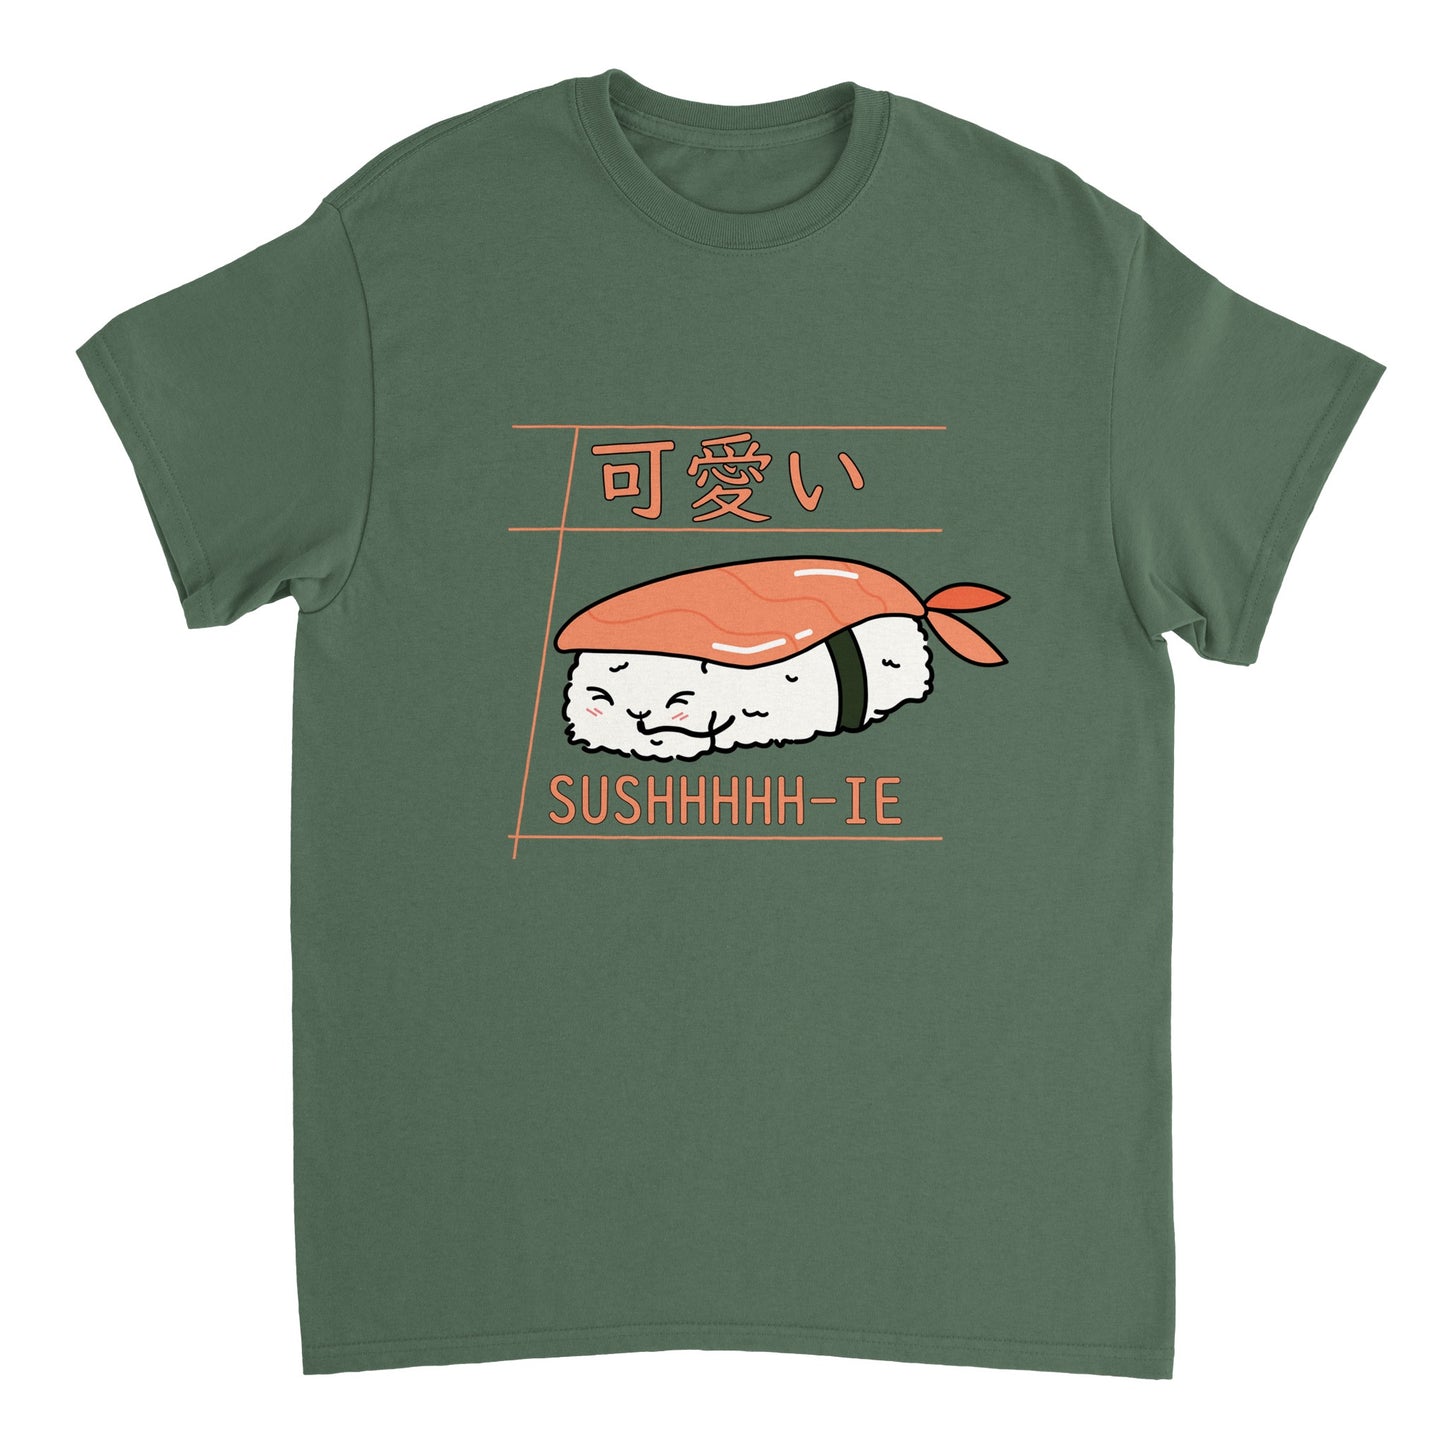 SUSHHHHH-IE Otaku World T Shirt